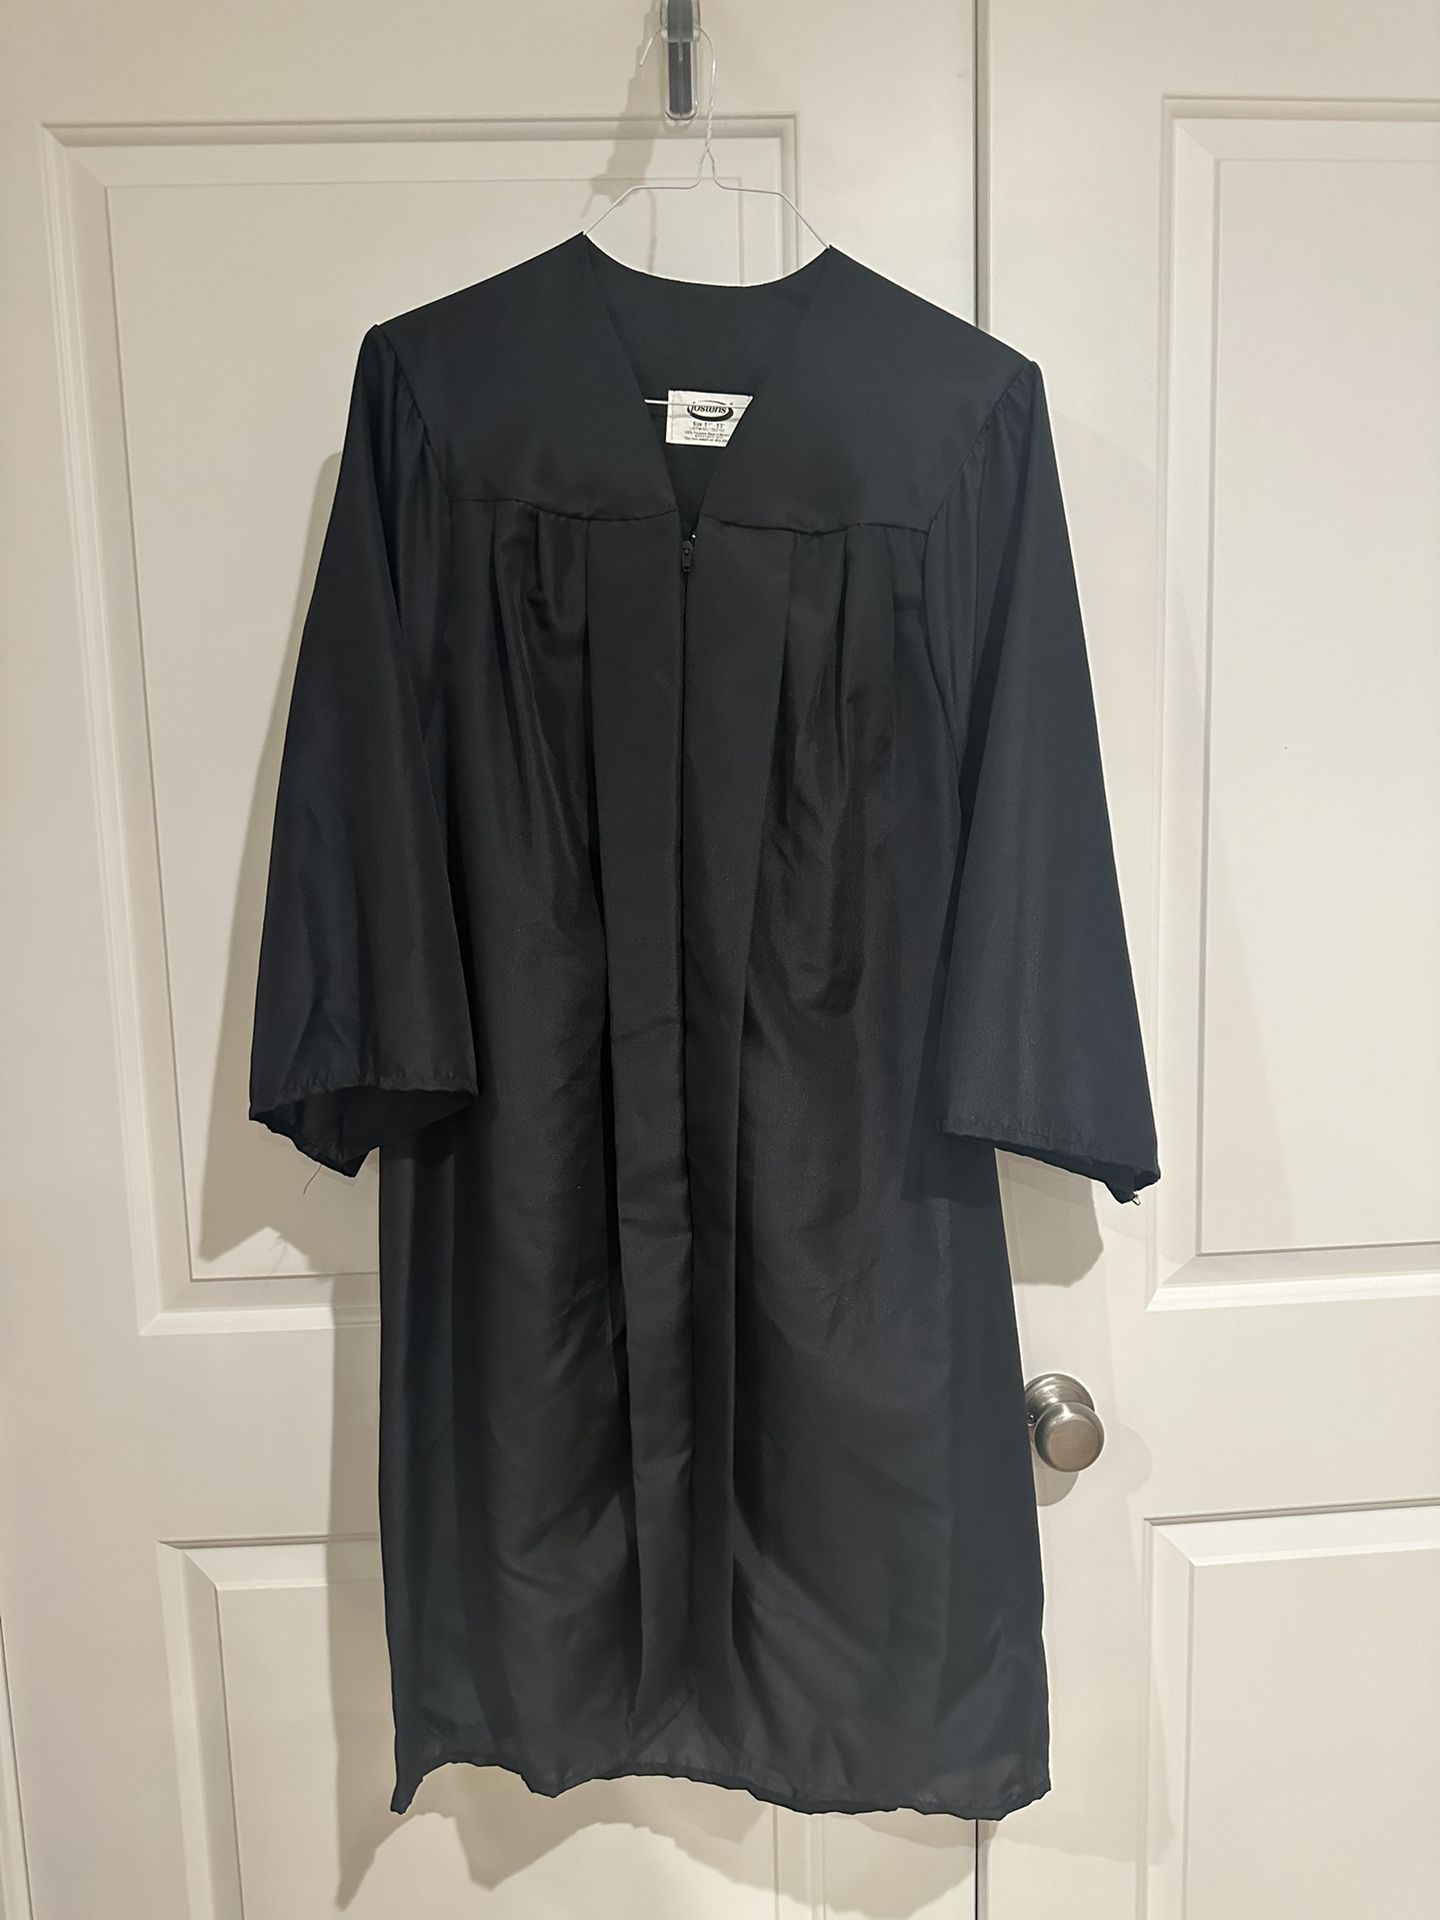 Jostens Black Graduation Gown